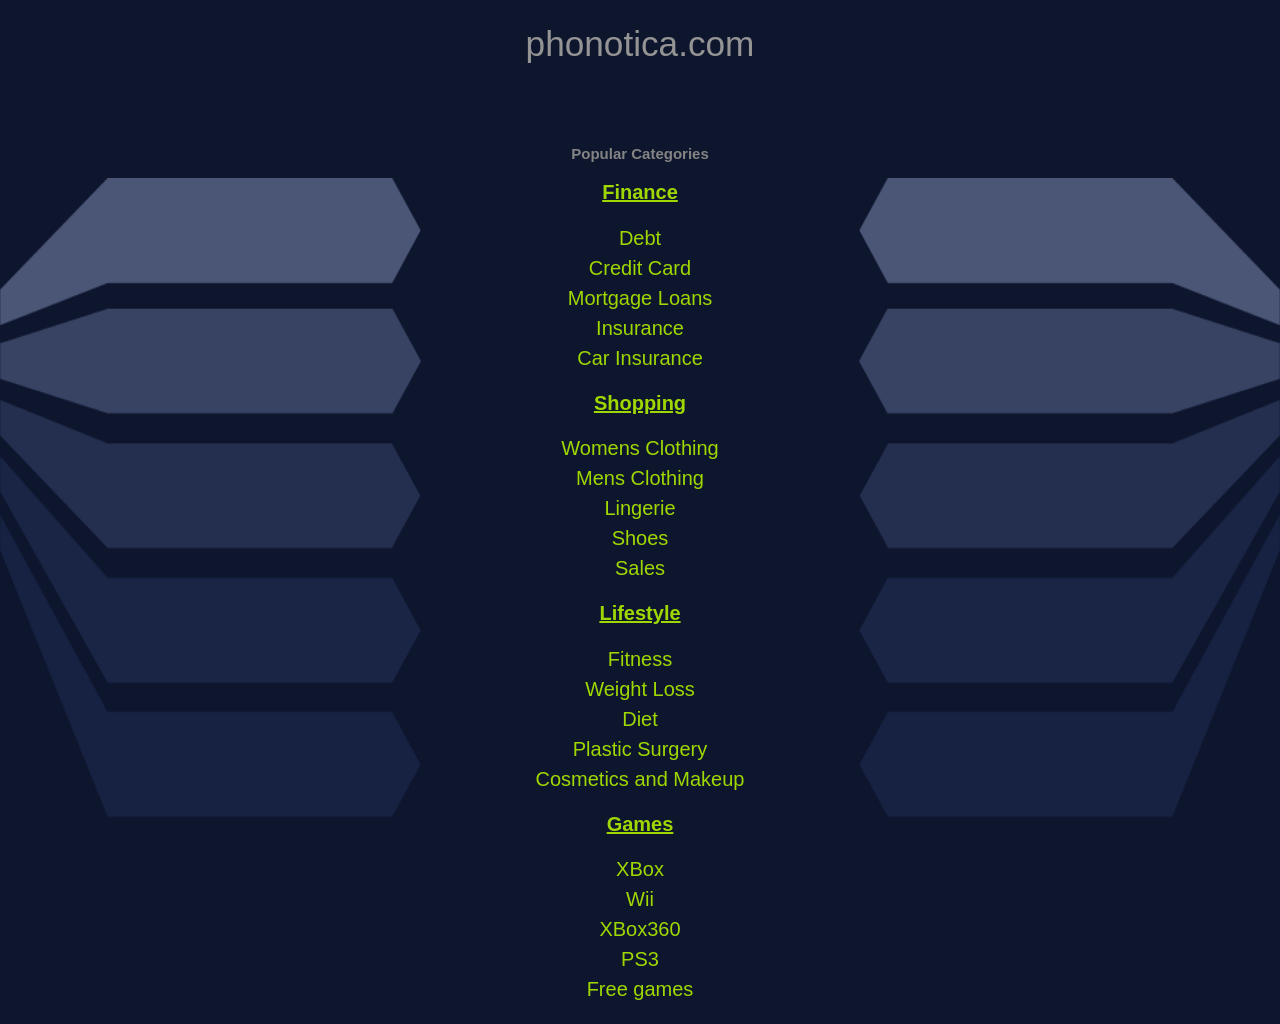 phonotica.com